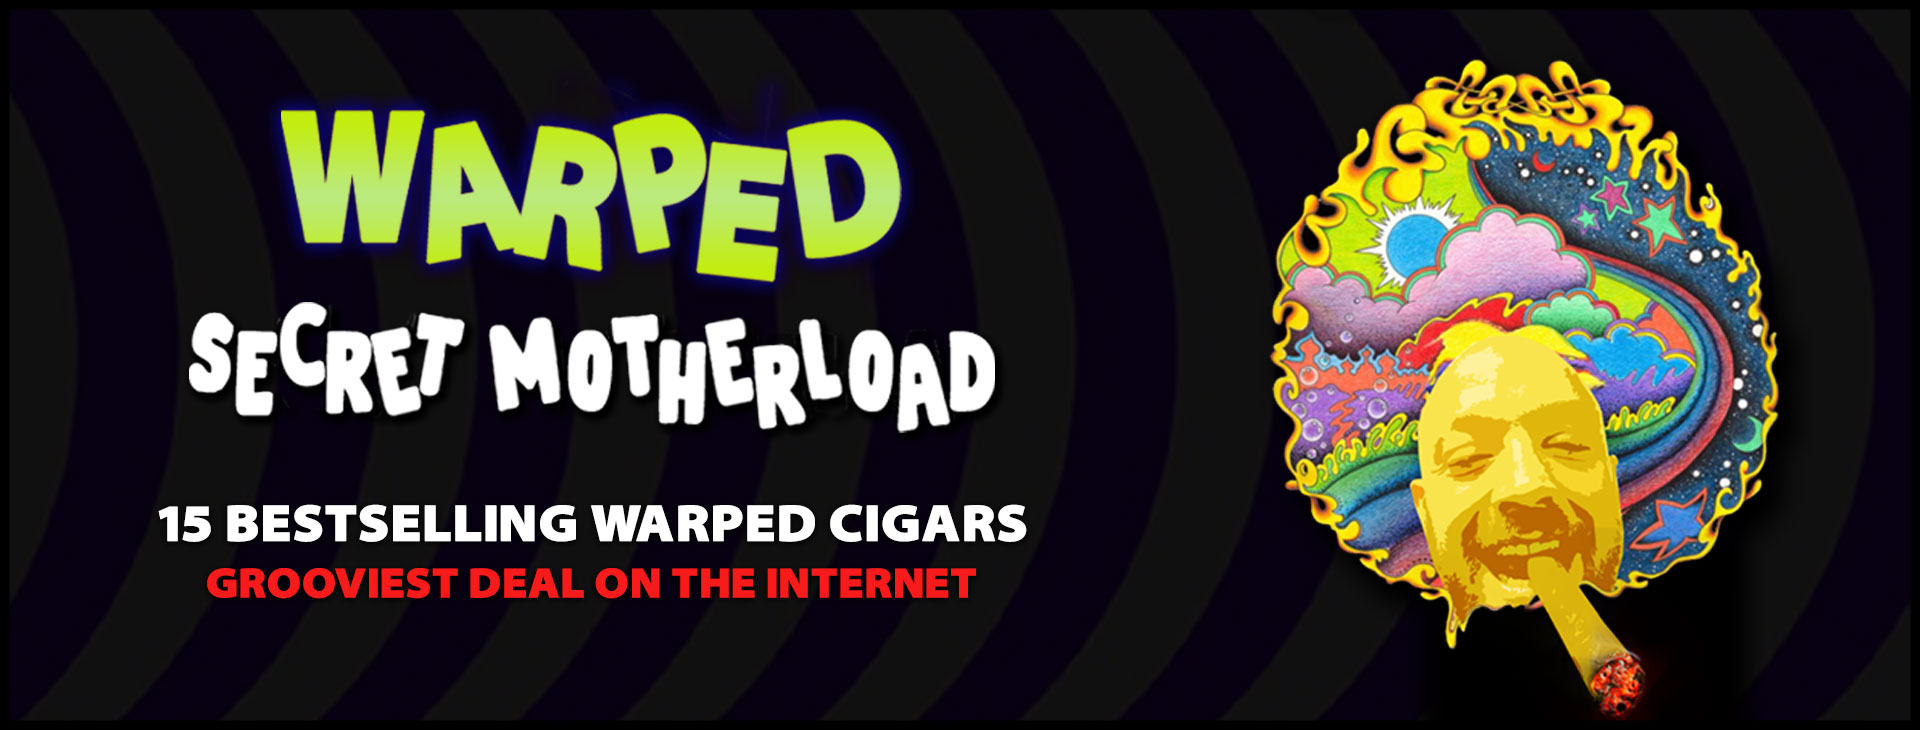 warped-secret-motherload-2022-banner.jpg